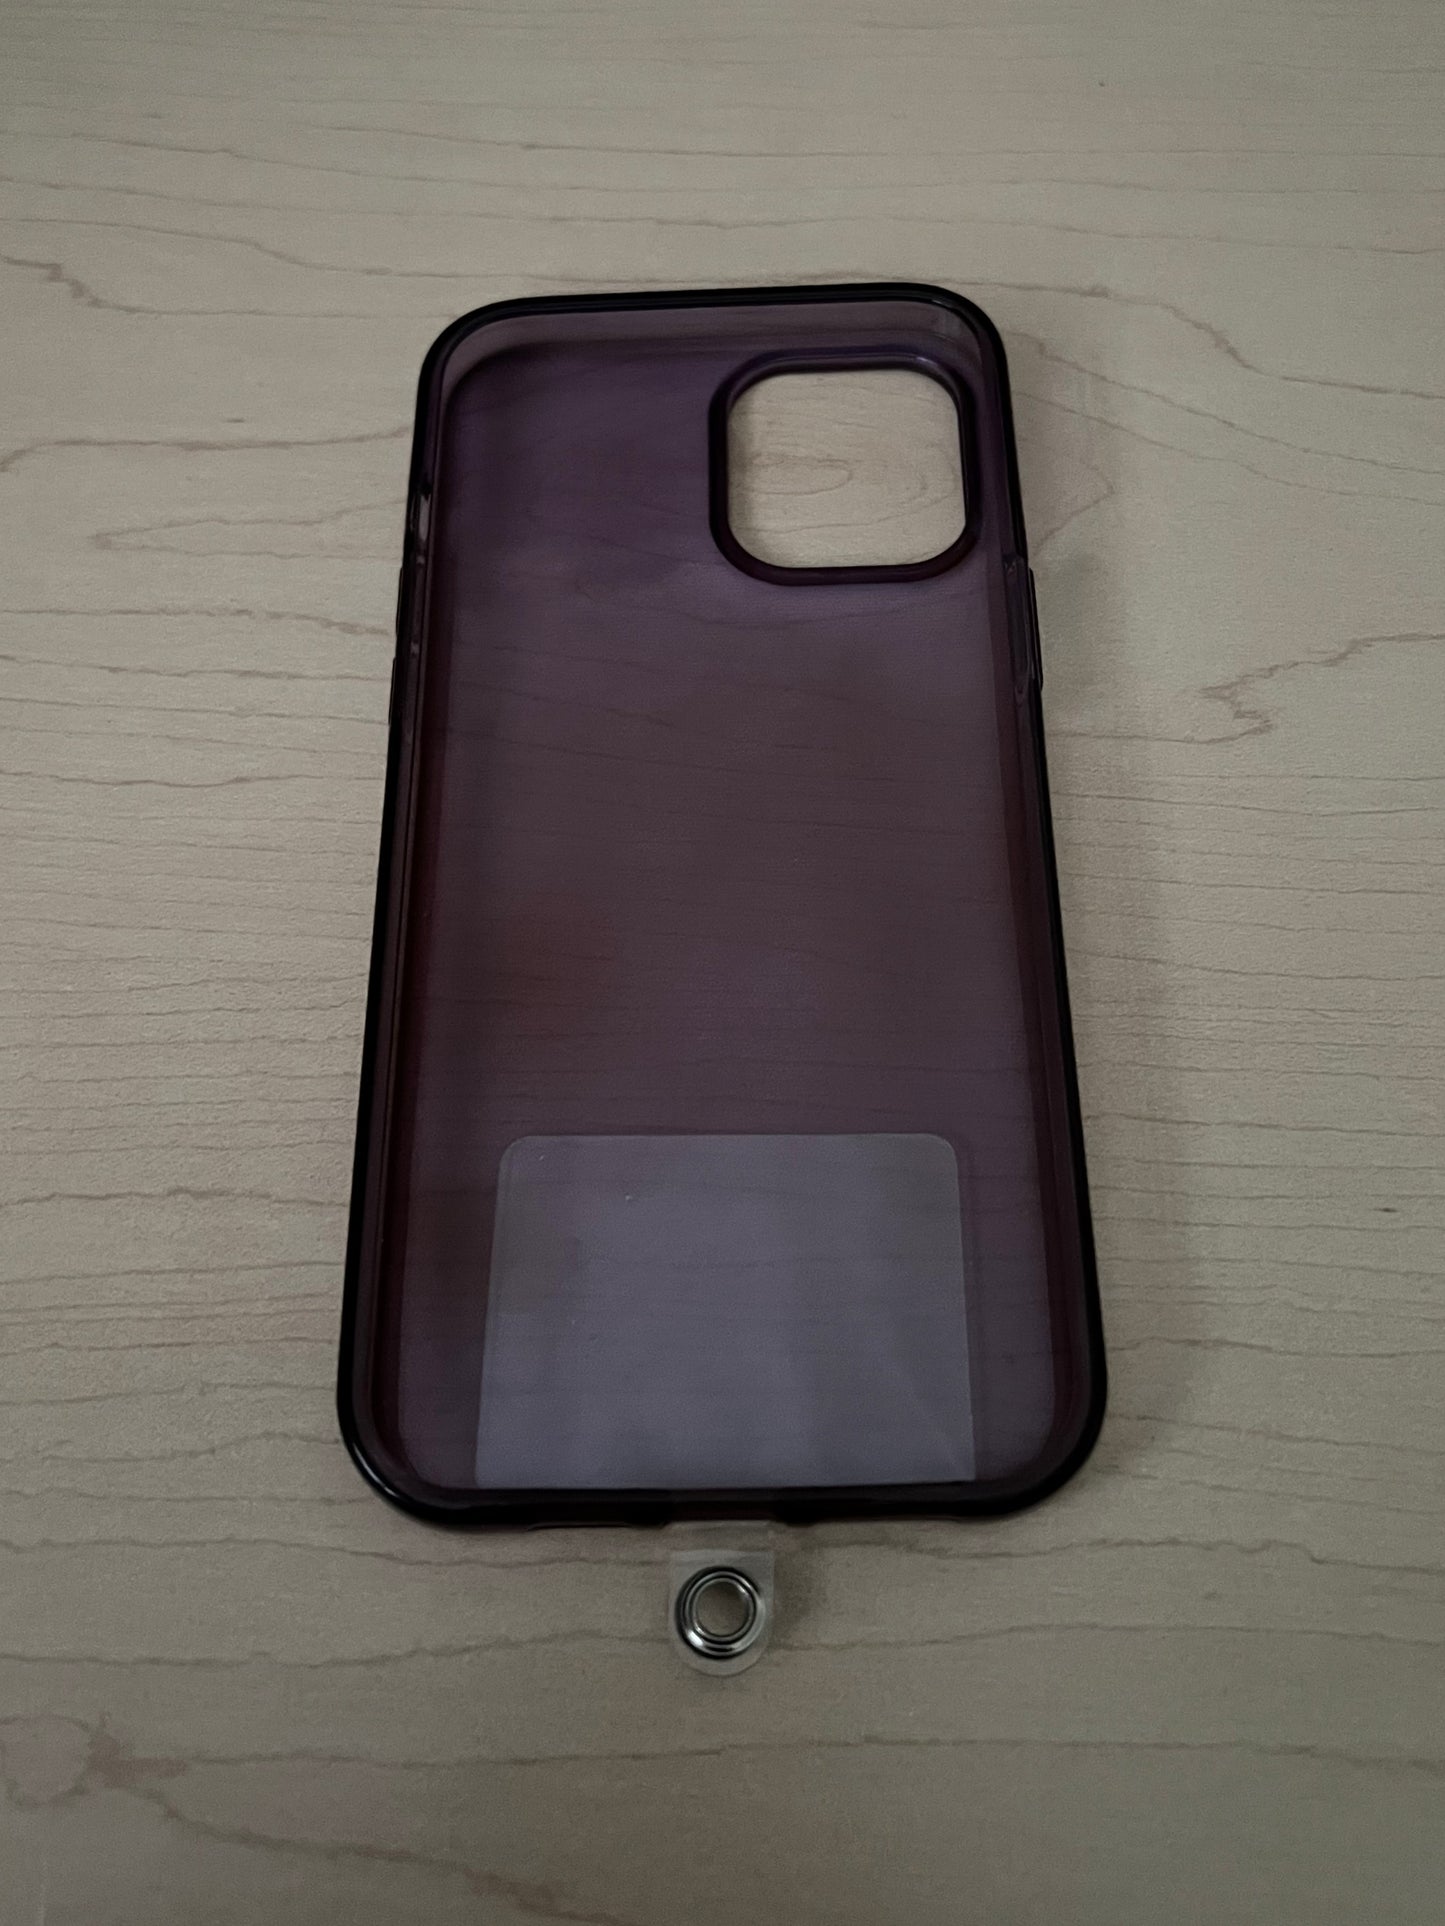 Dolphin Purple & White Phone/Keychain/Bag Charm